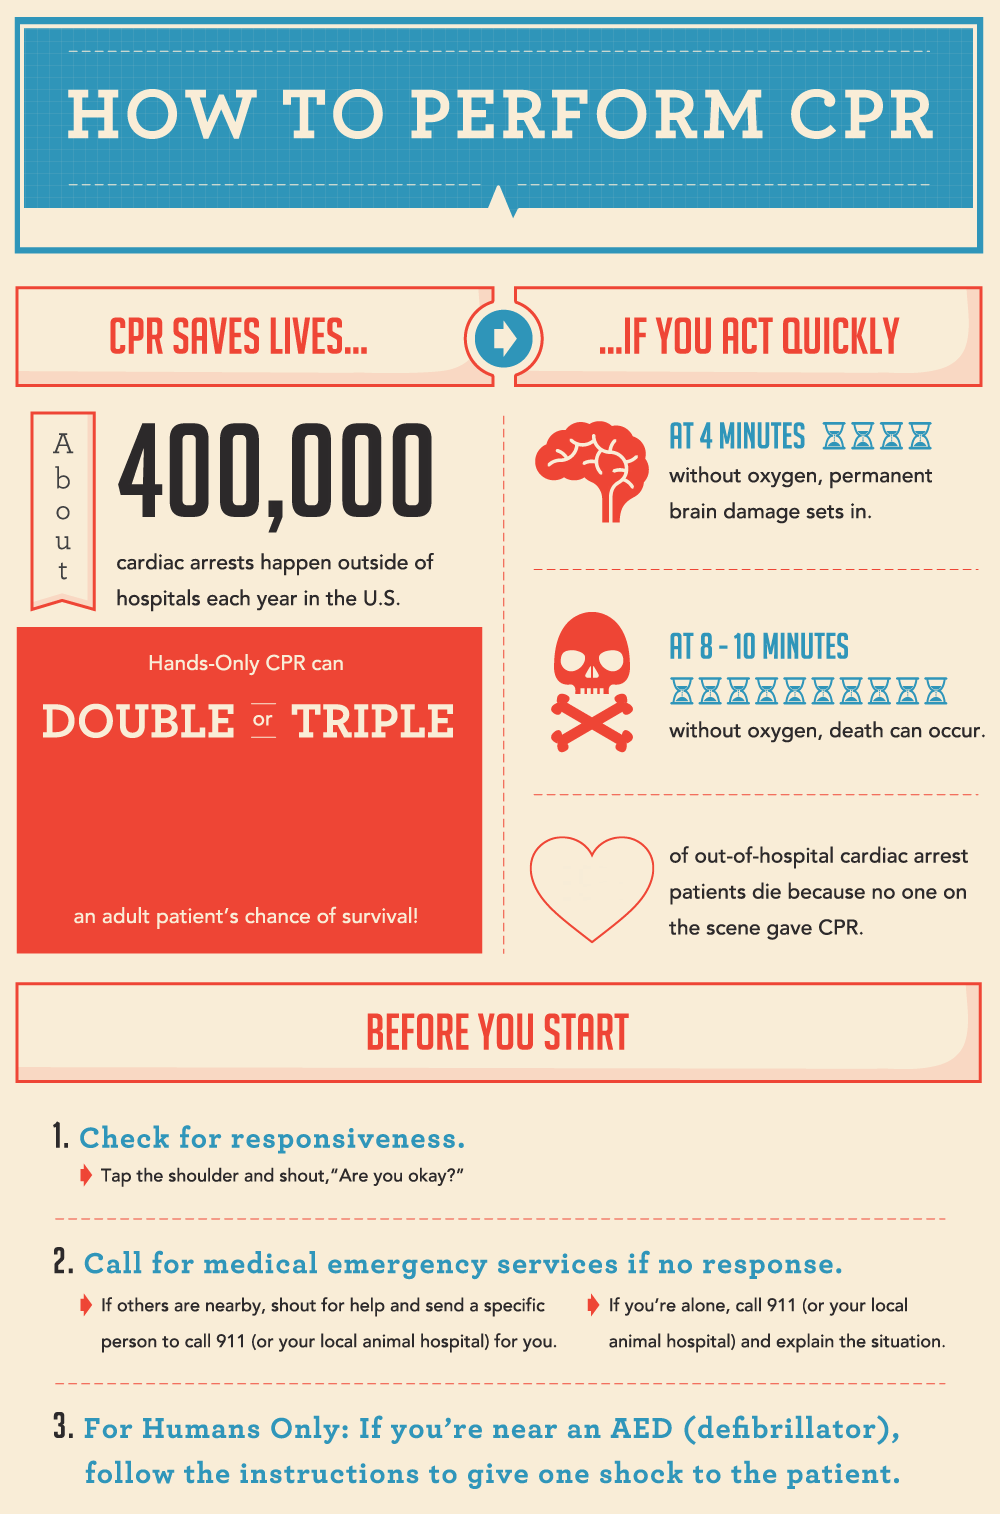 CPR маркетинг. How to perform CPR. Инфографика гиф.